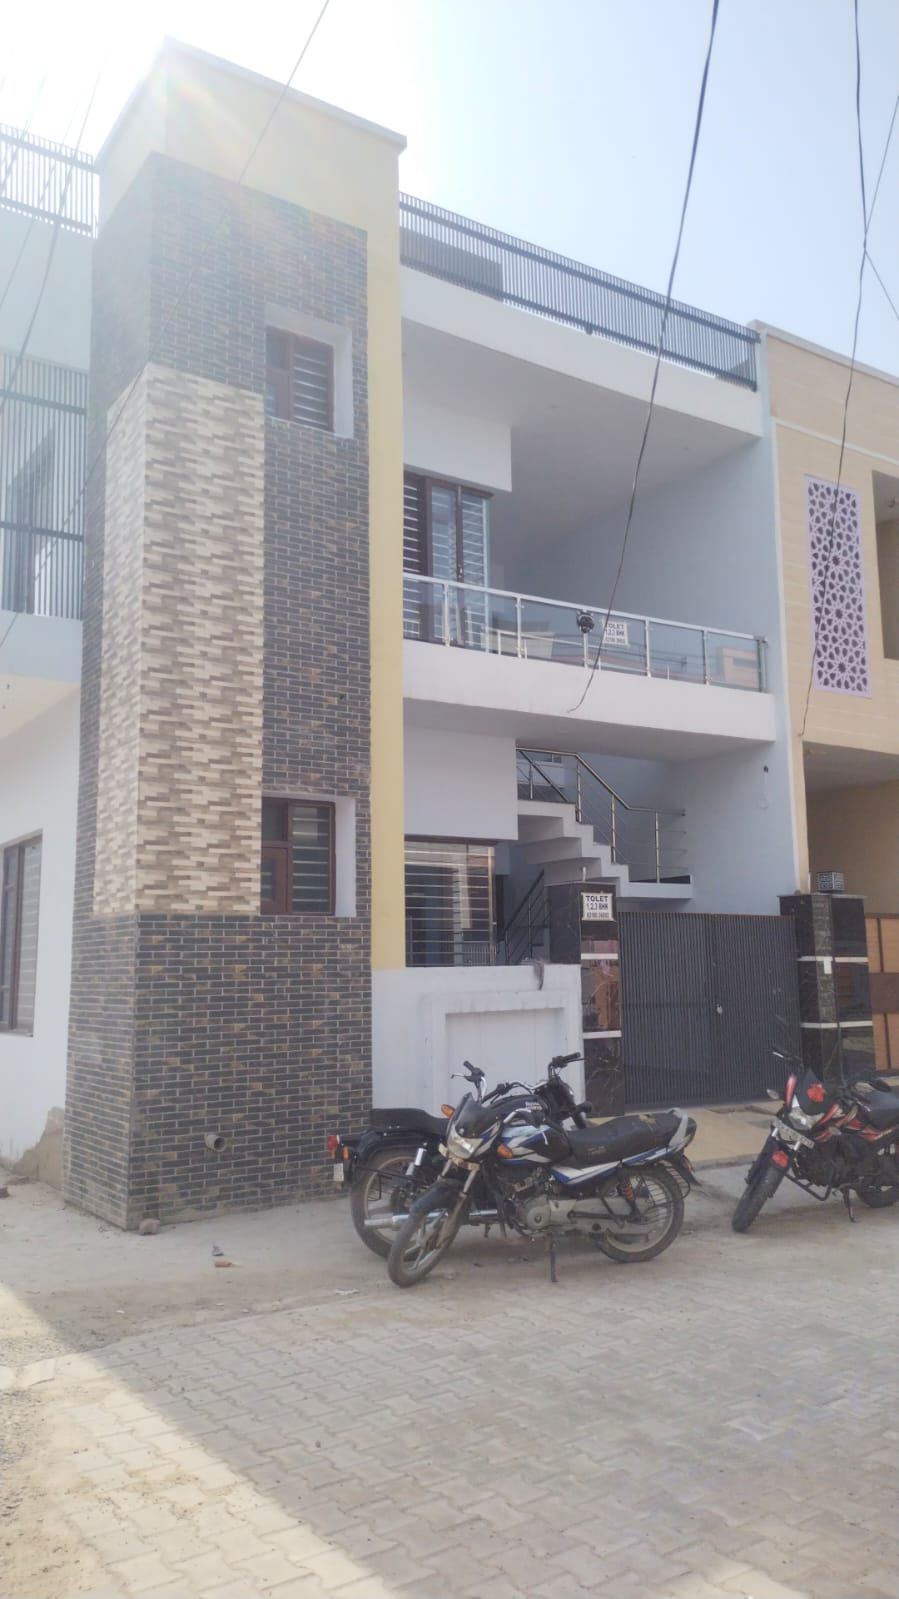 3 Bed/ 3 Bath Rent Apartment/ Flat; 1,800 sq. ft. carpet area, Furnished for rent @Guru teg Bahadur nagar , kharar (Near Chandigarh University)